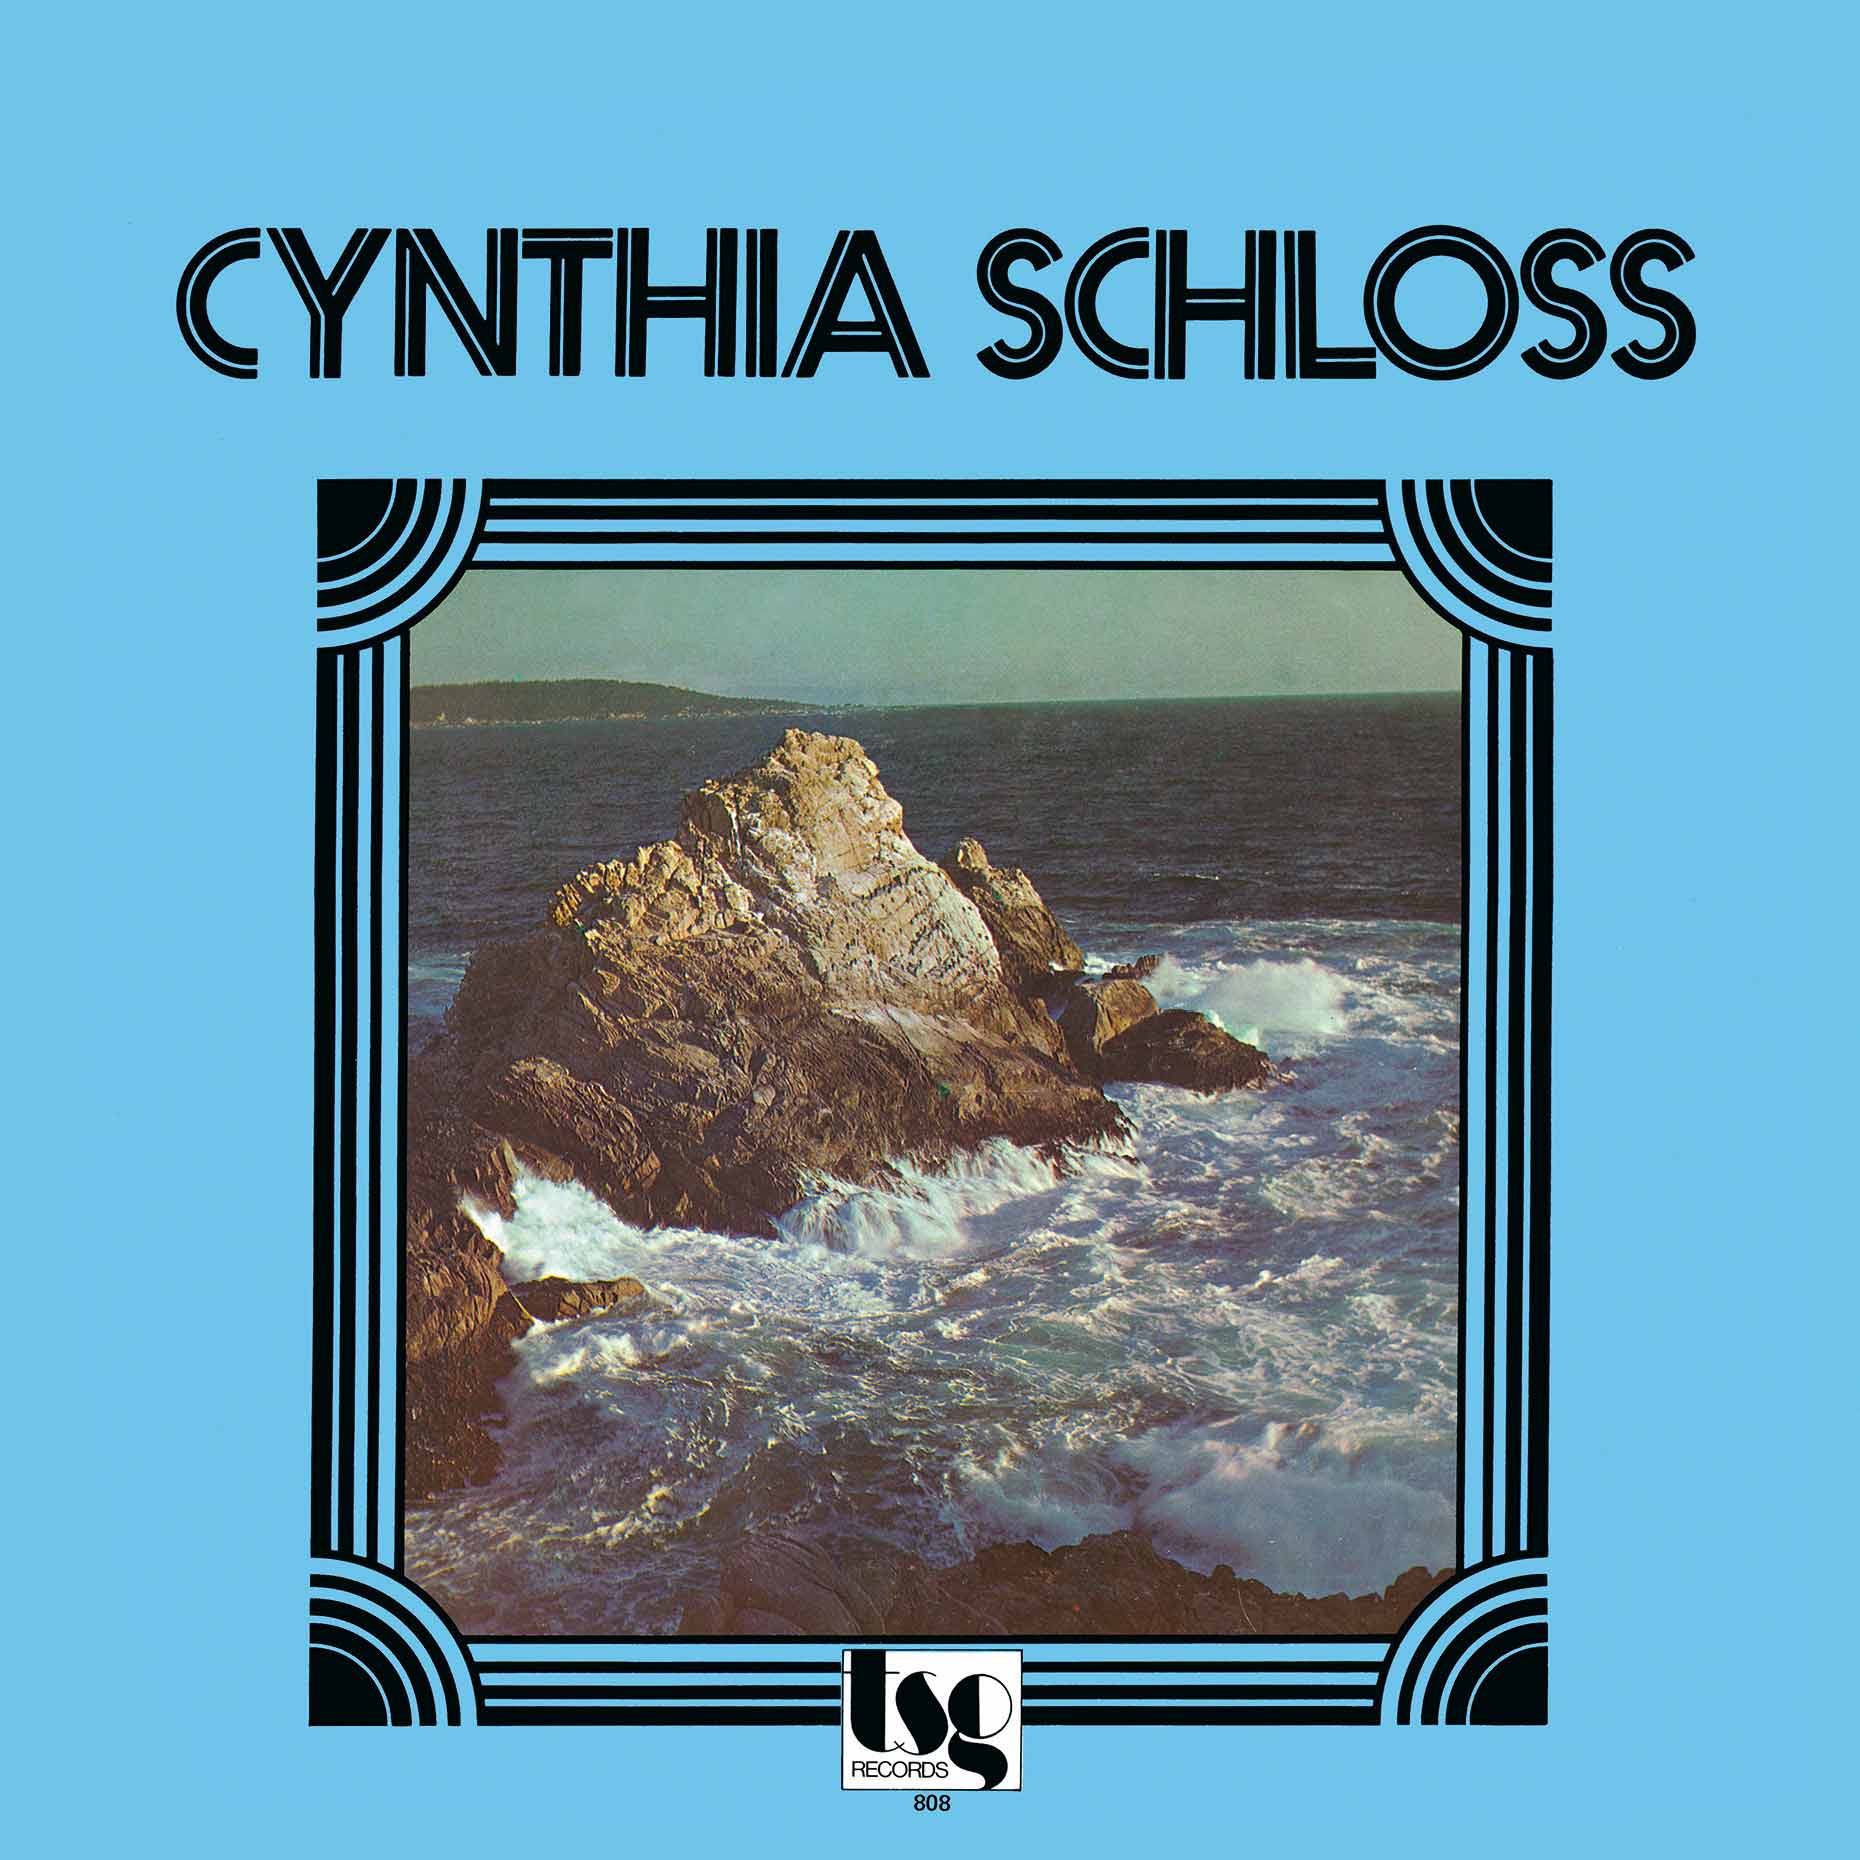 CYNTHIA SCHLOSS